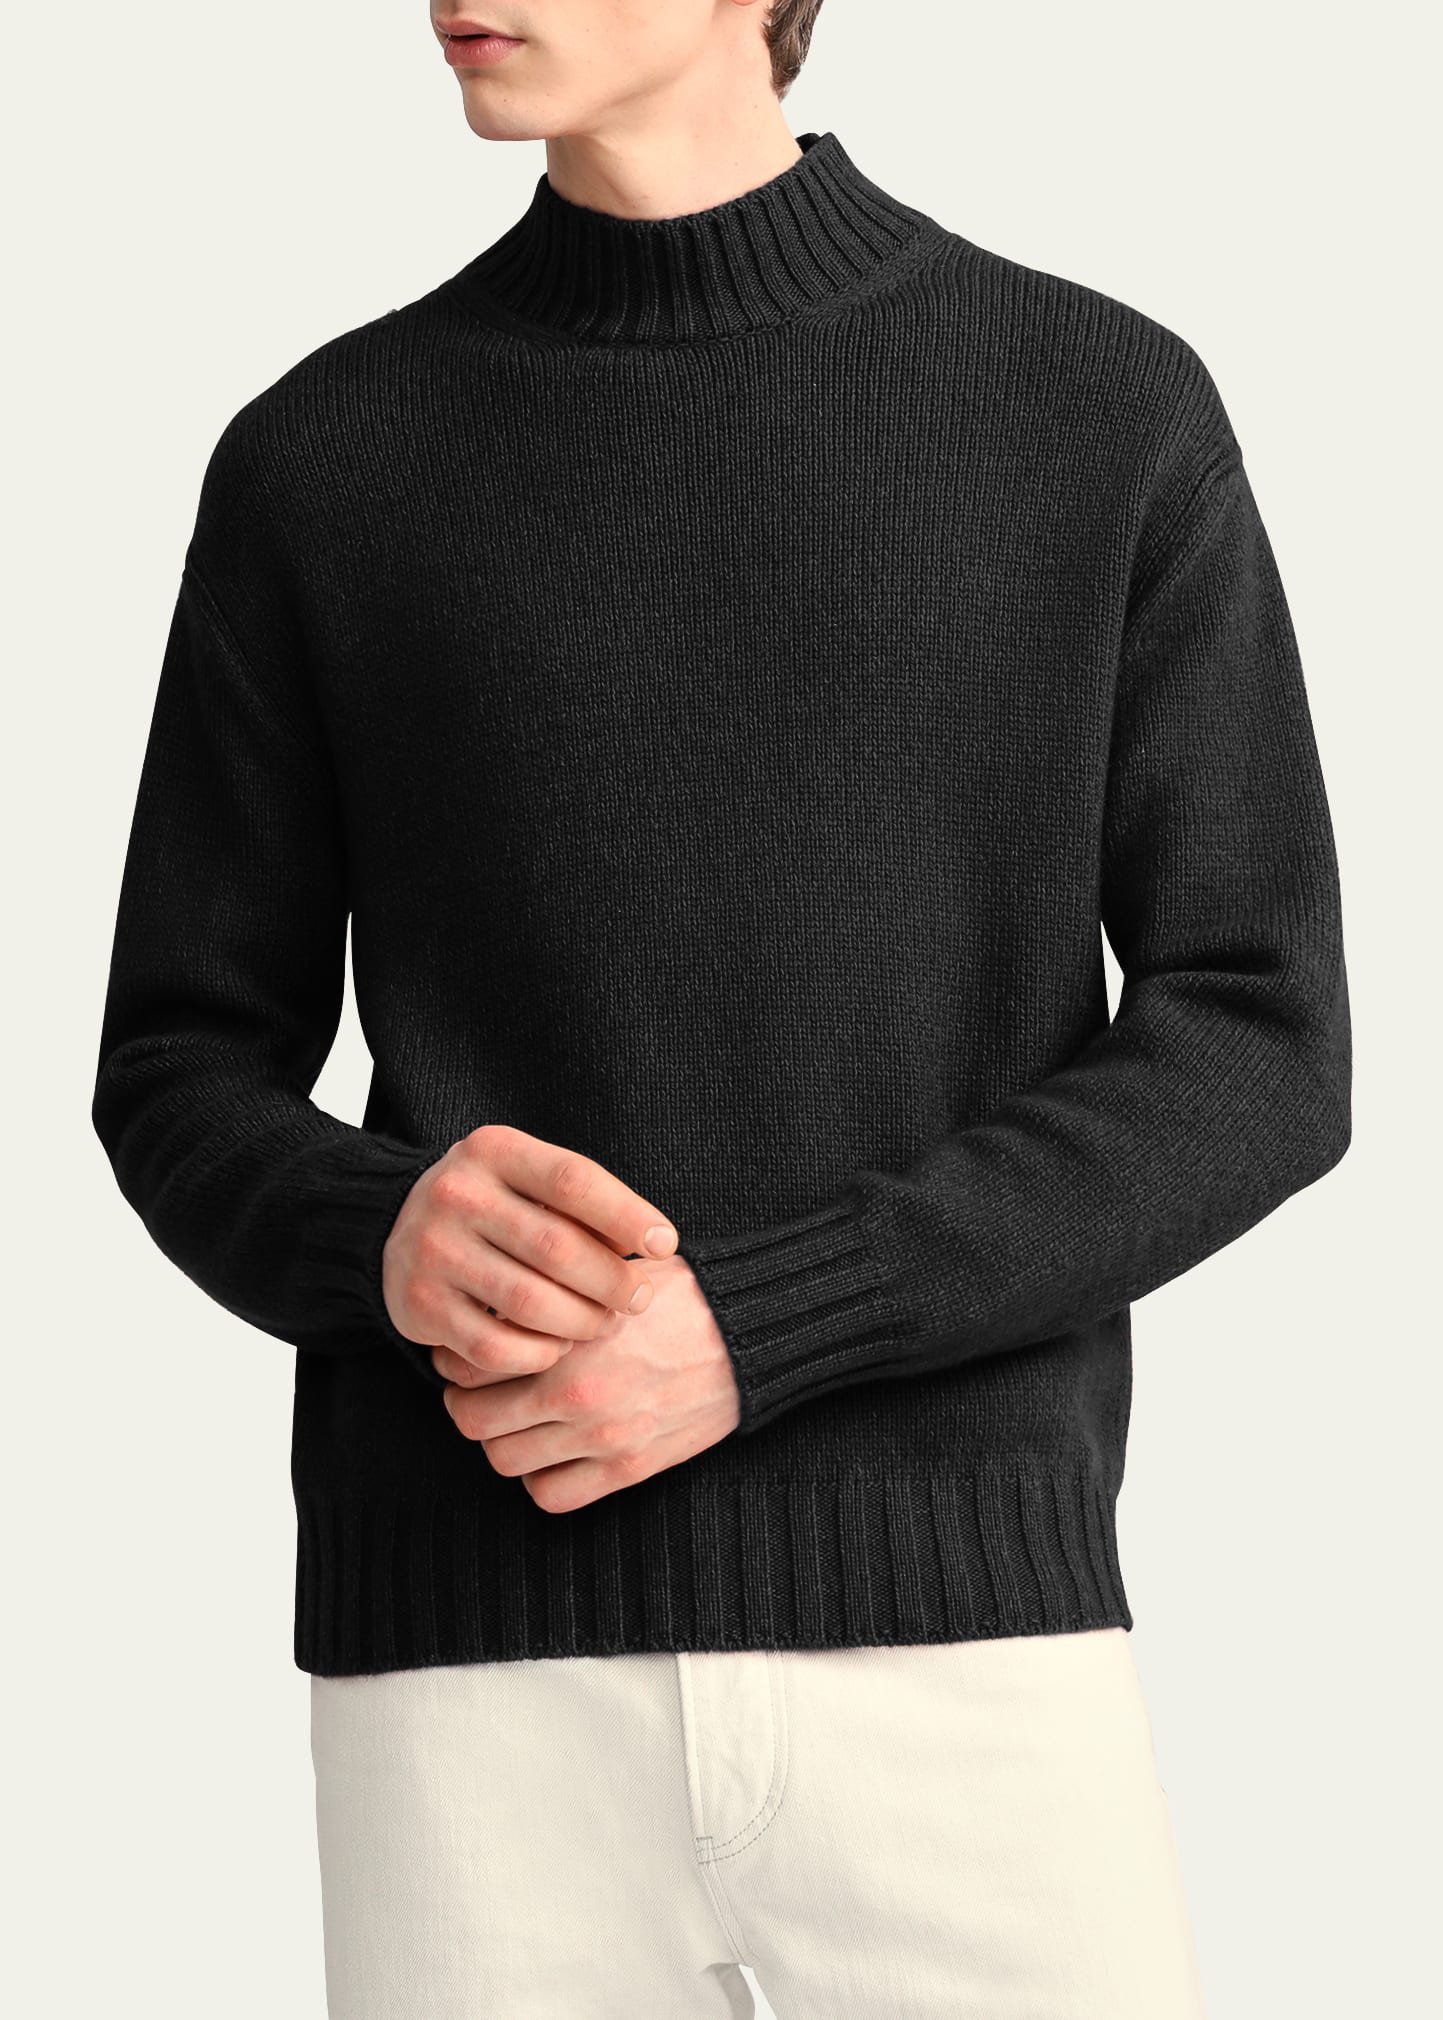 Men's Cashmere Mock Neck Sweater